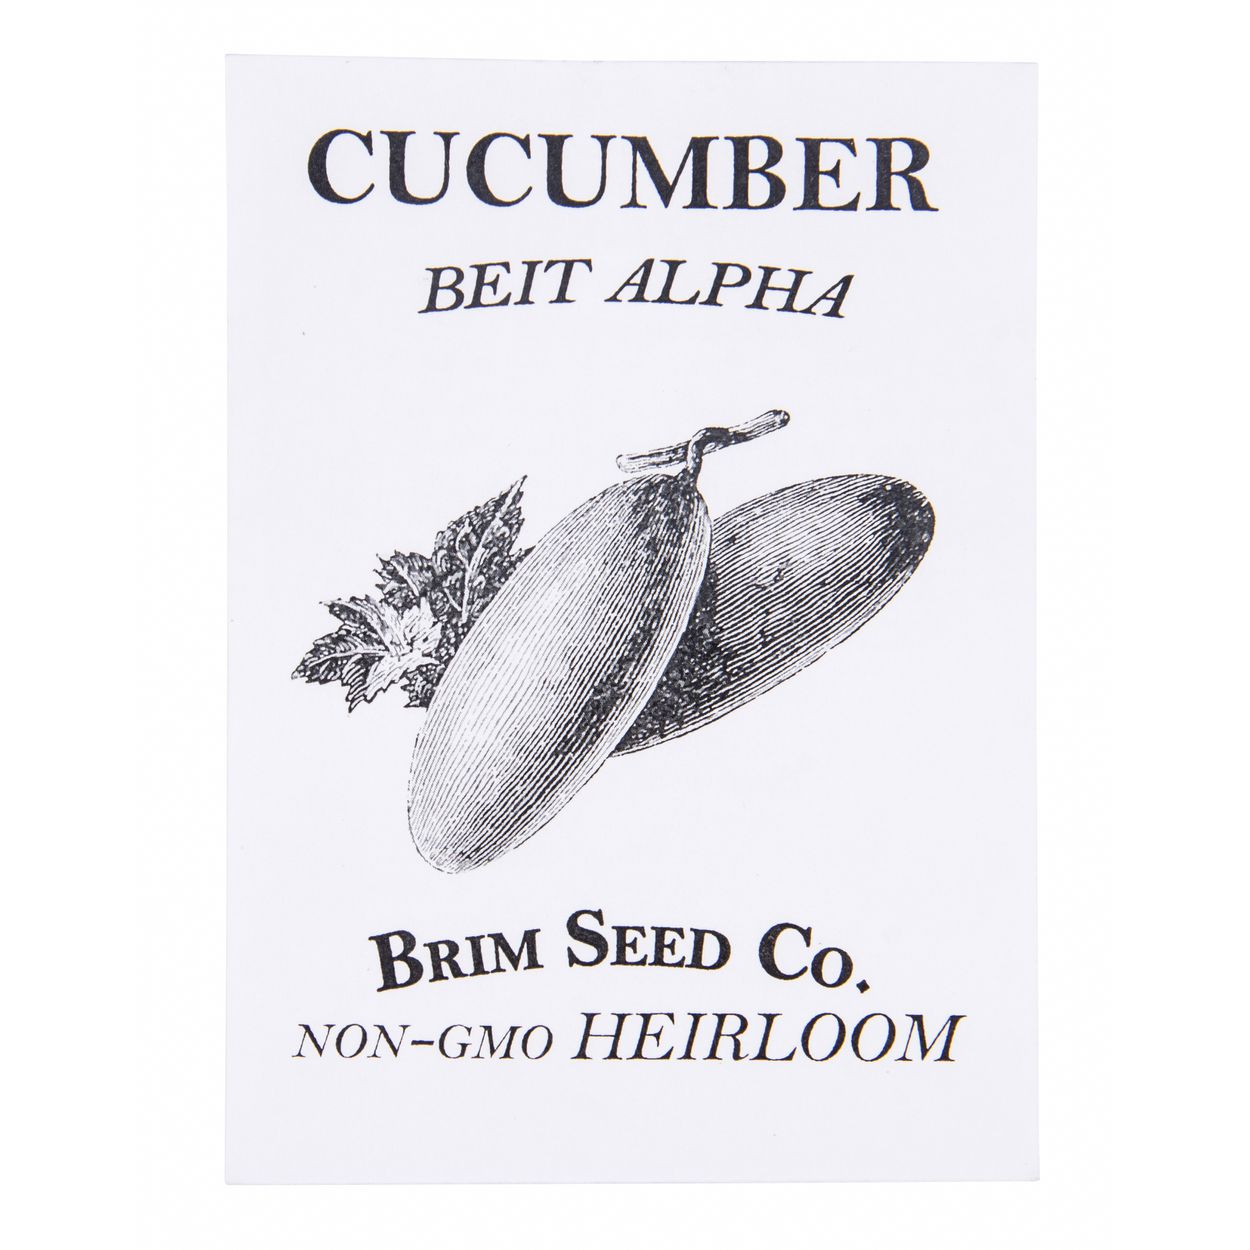 Brim Seed Co. - Beit Alpha Cucumber Heirloom Seed